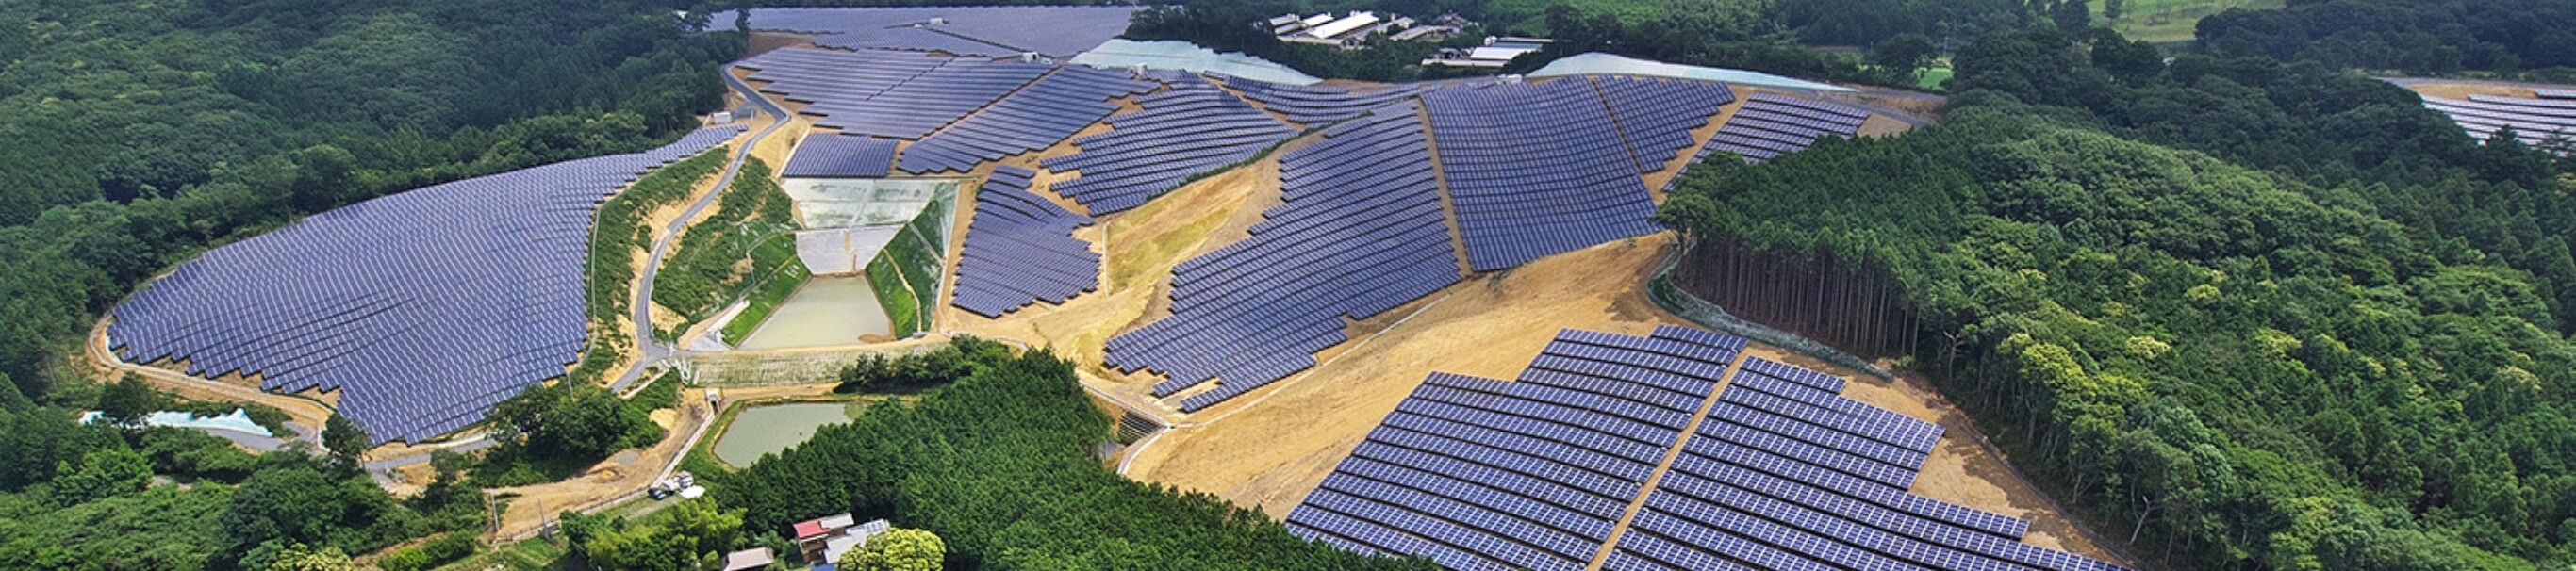 太陽光発電施設の開発